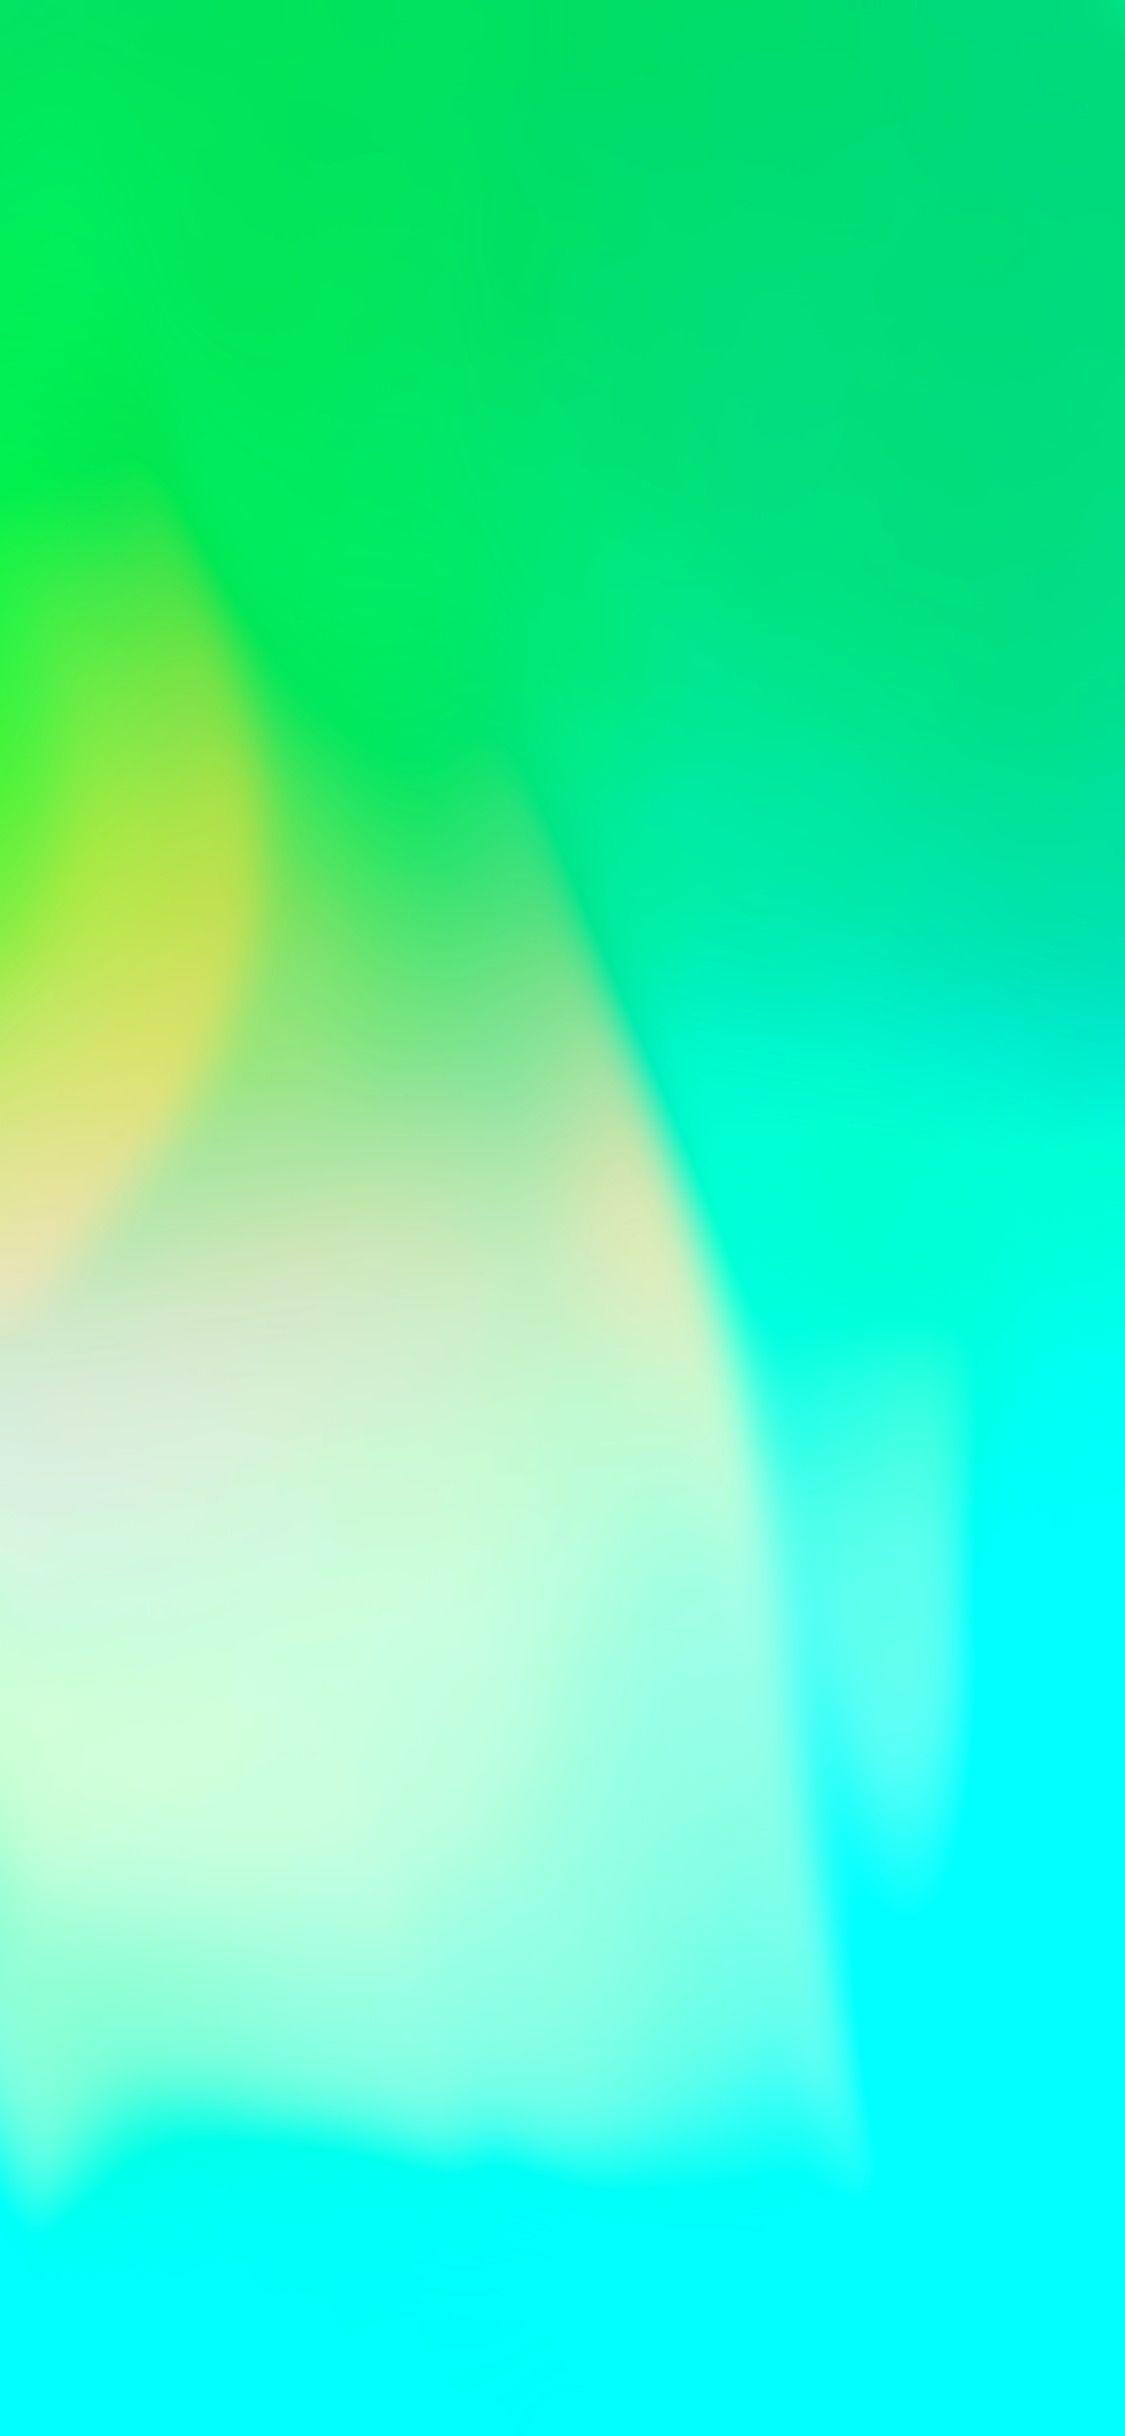 Ios iPhone X, Green, Aqua, Clean, Simple, Abstract, Green